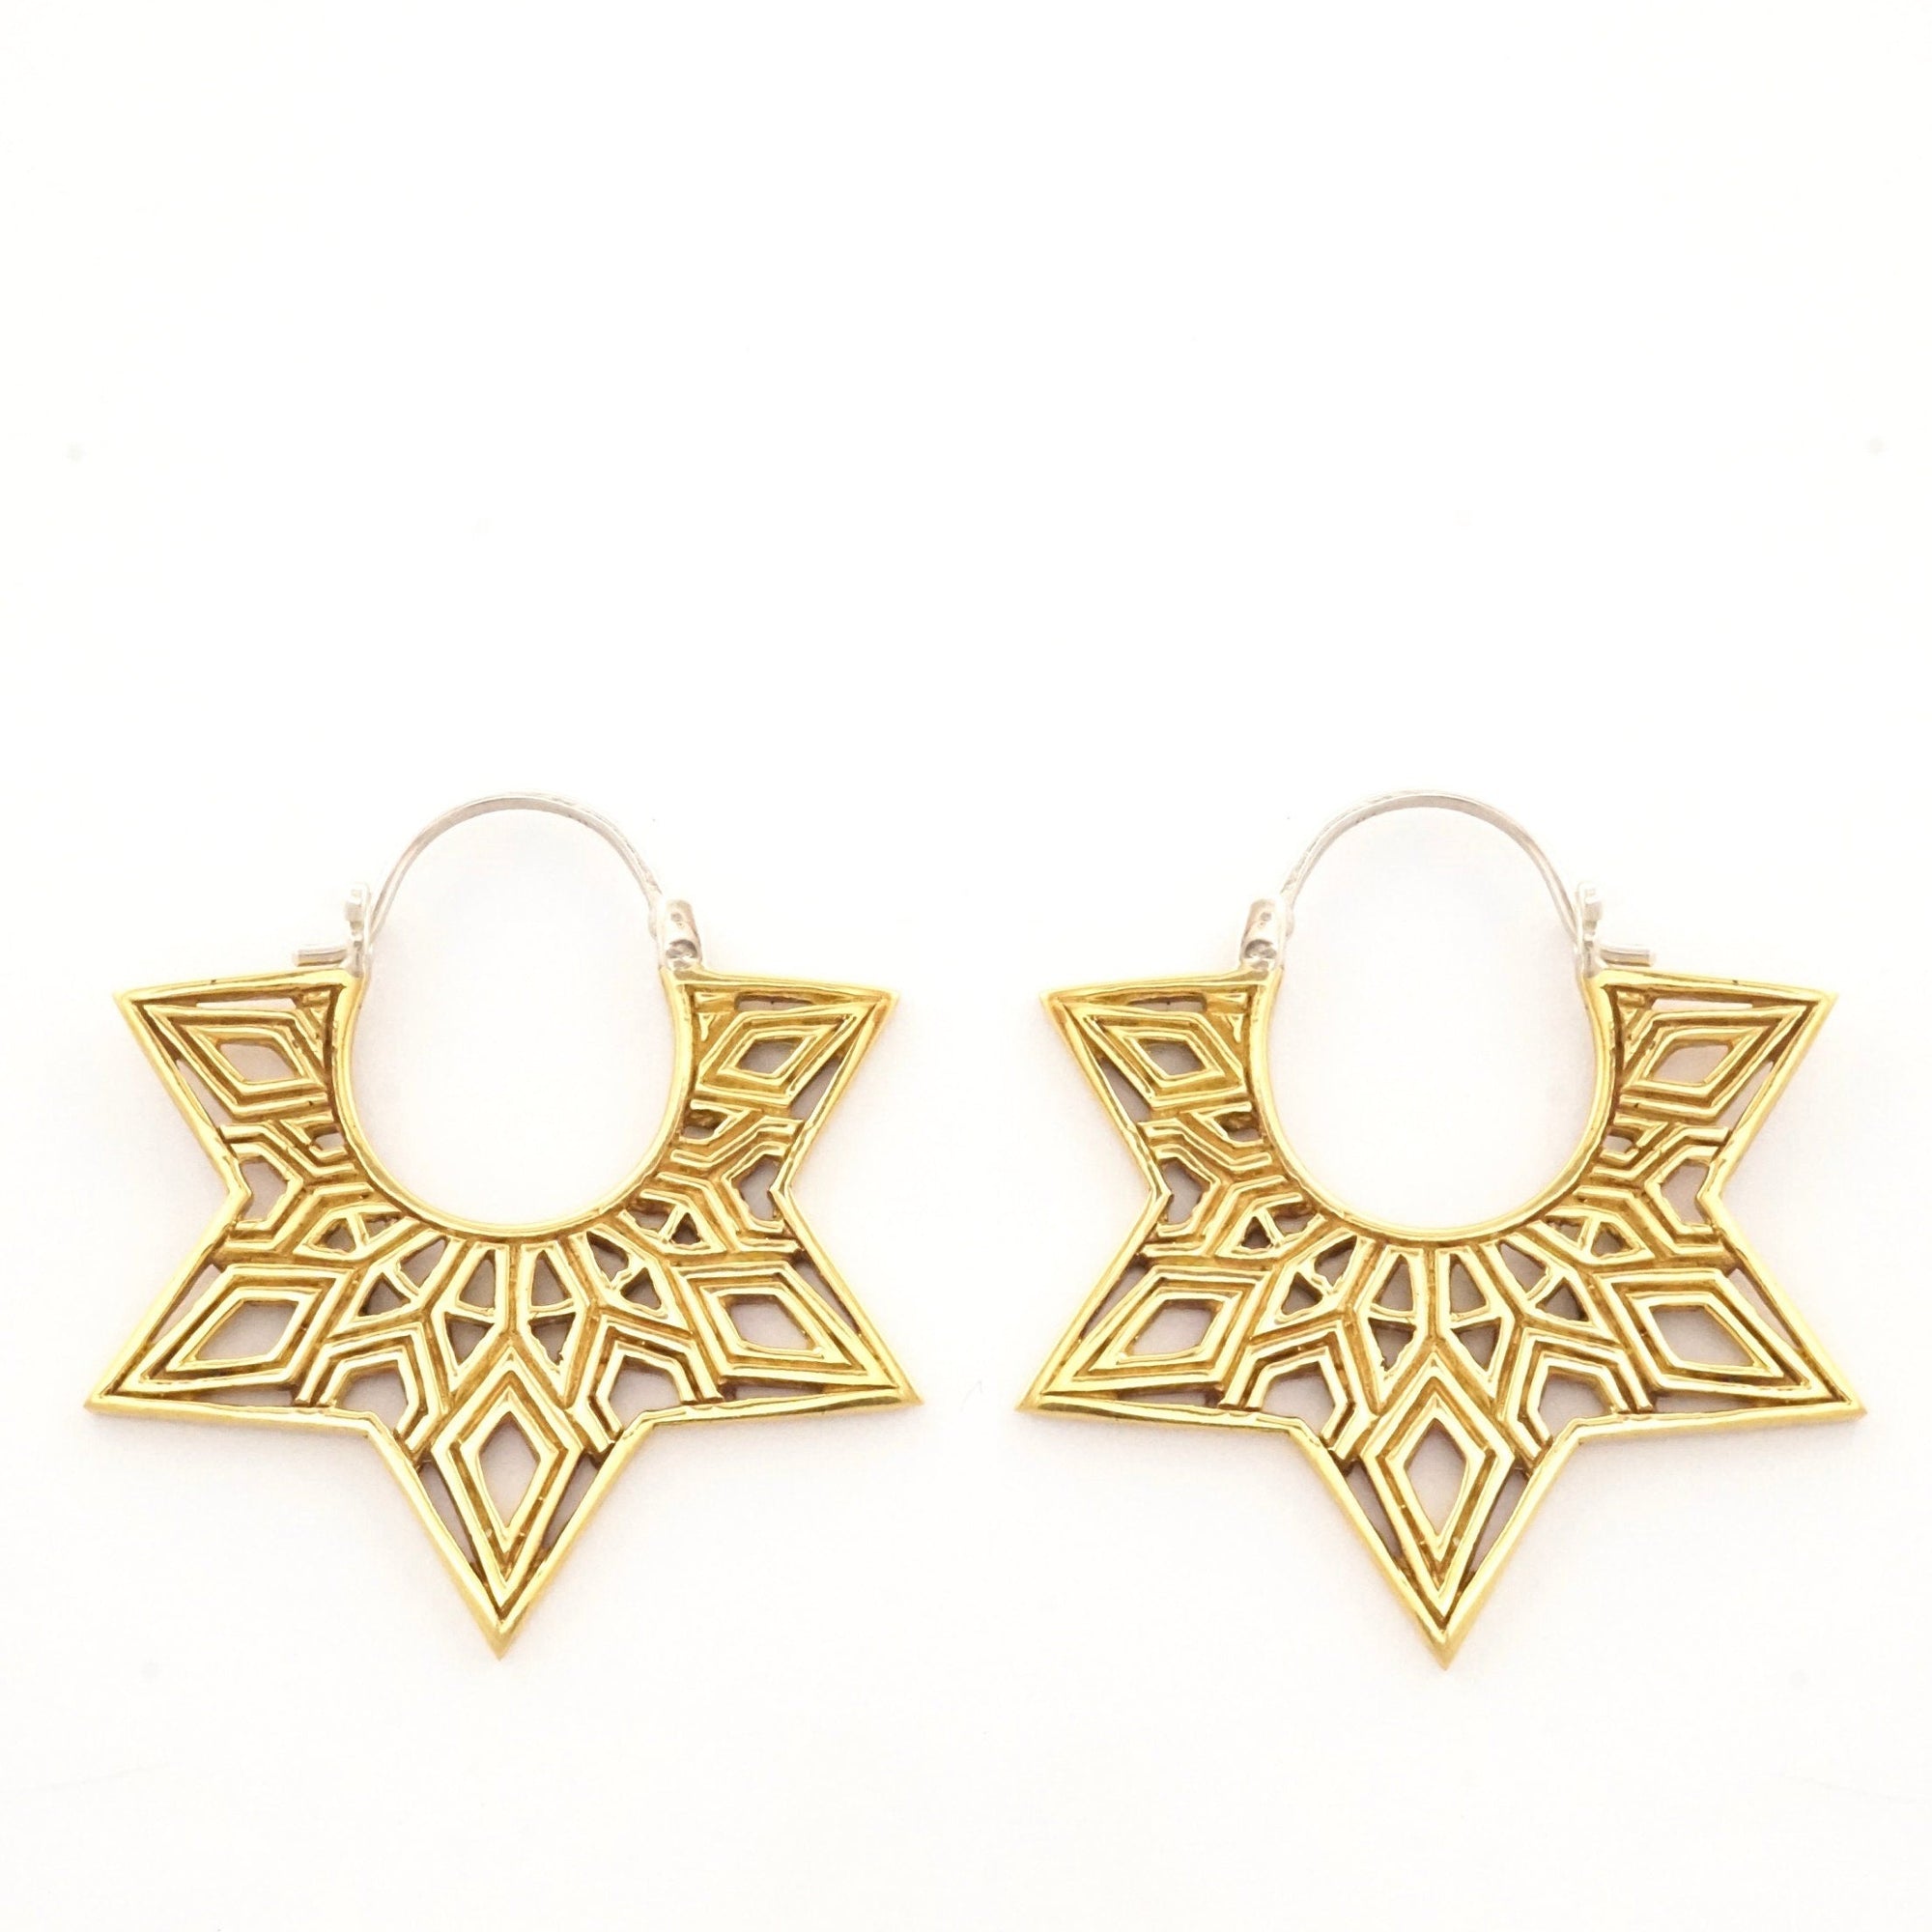 Mandala Statement Earrings - Medium Hoops - Gold Star Tunnel Earrings - Boho Hoops (244B)